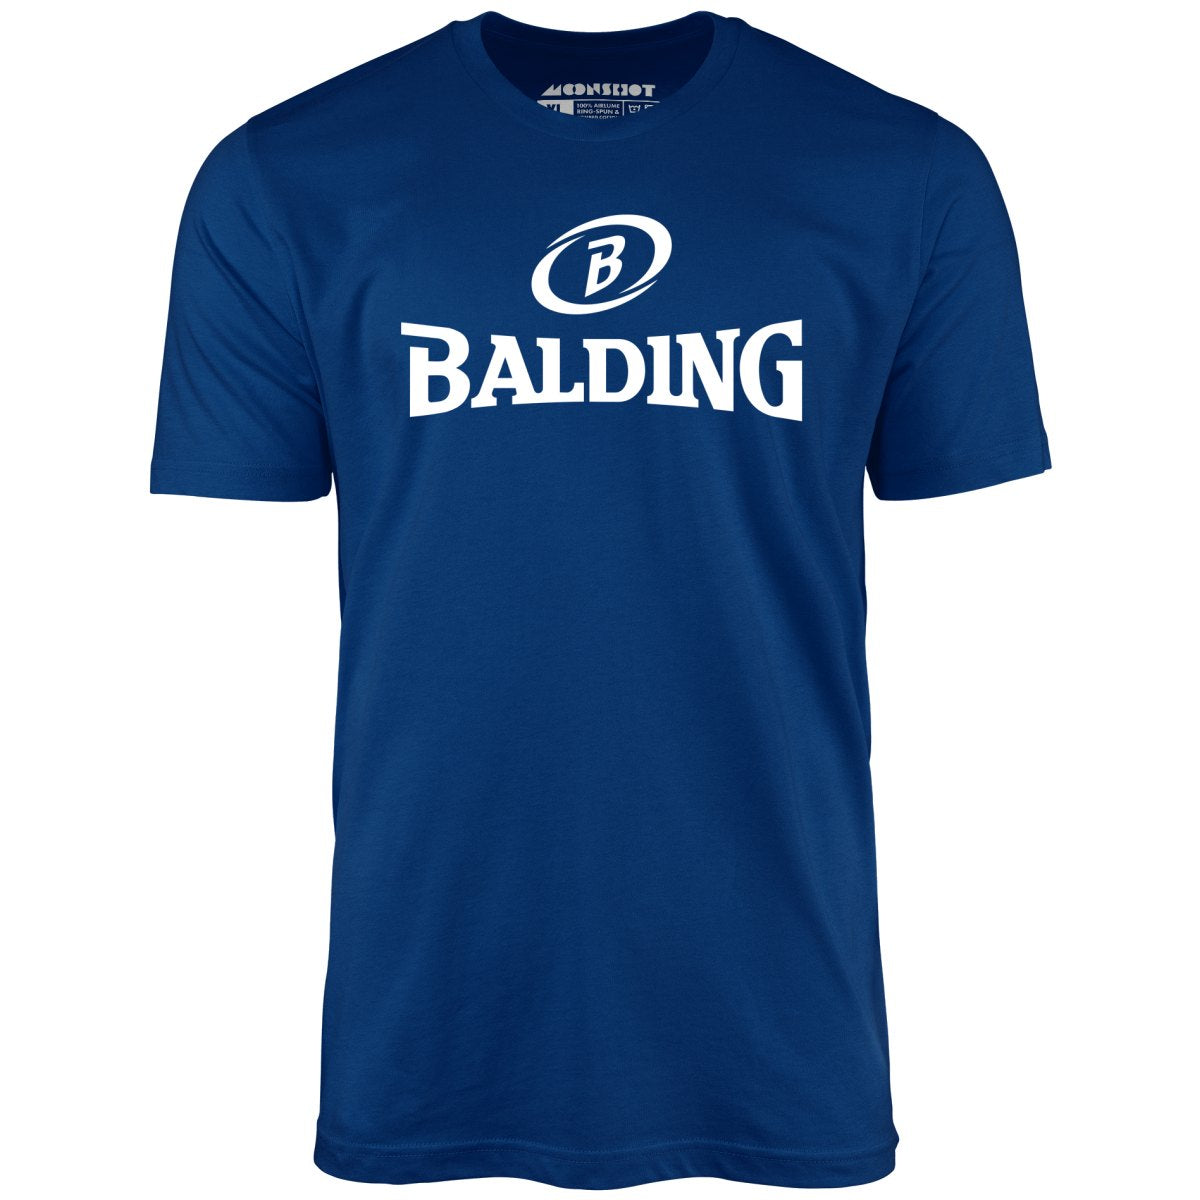 Balding - Unisex T-Shirt